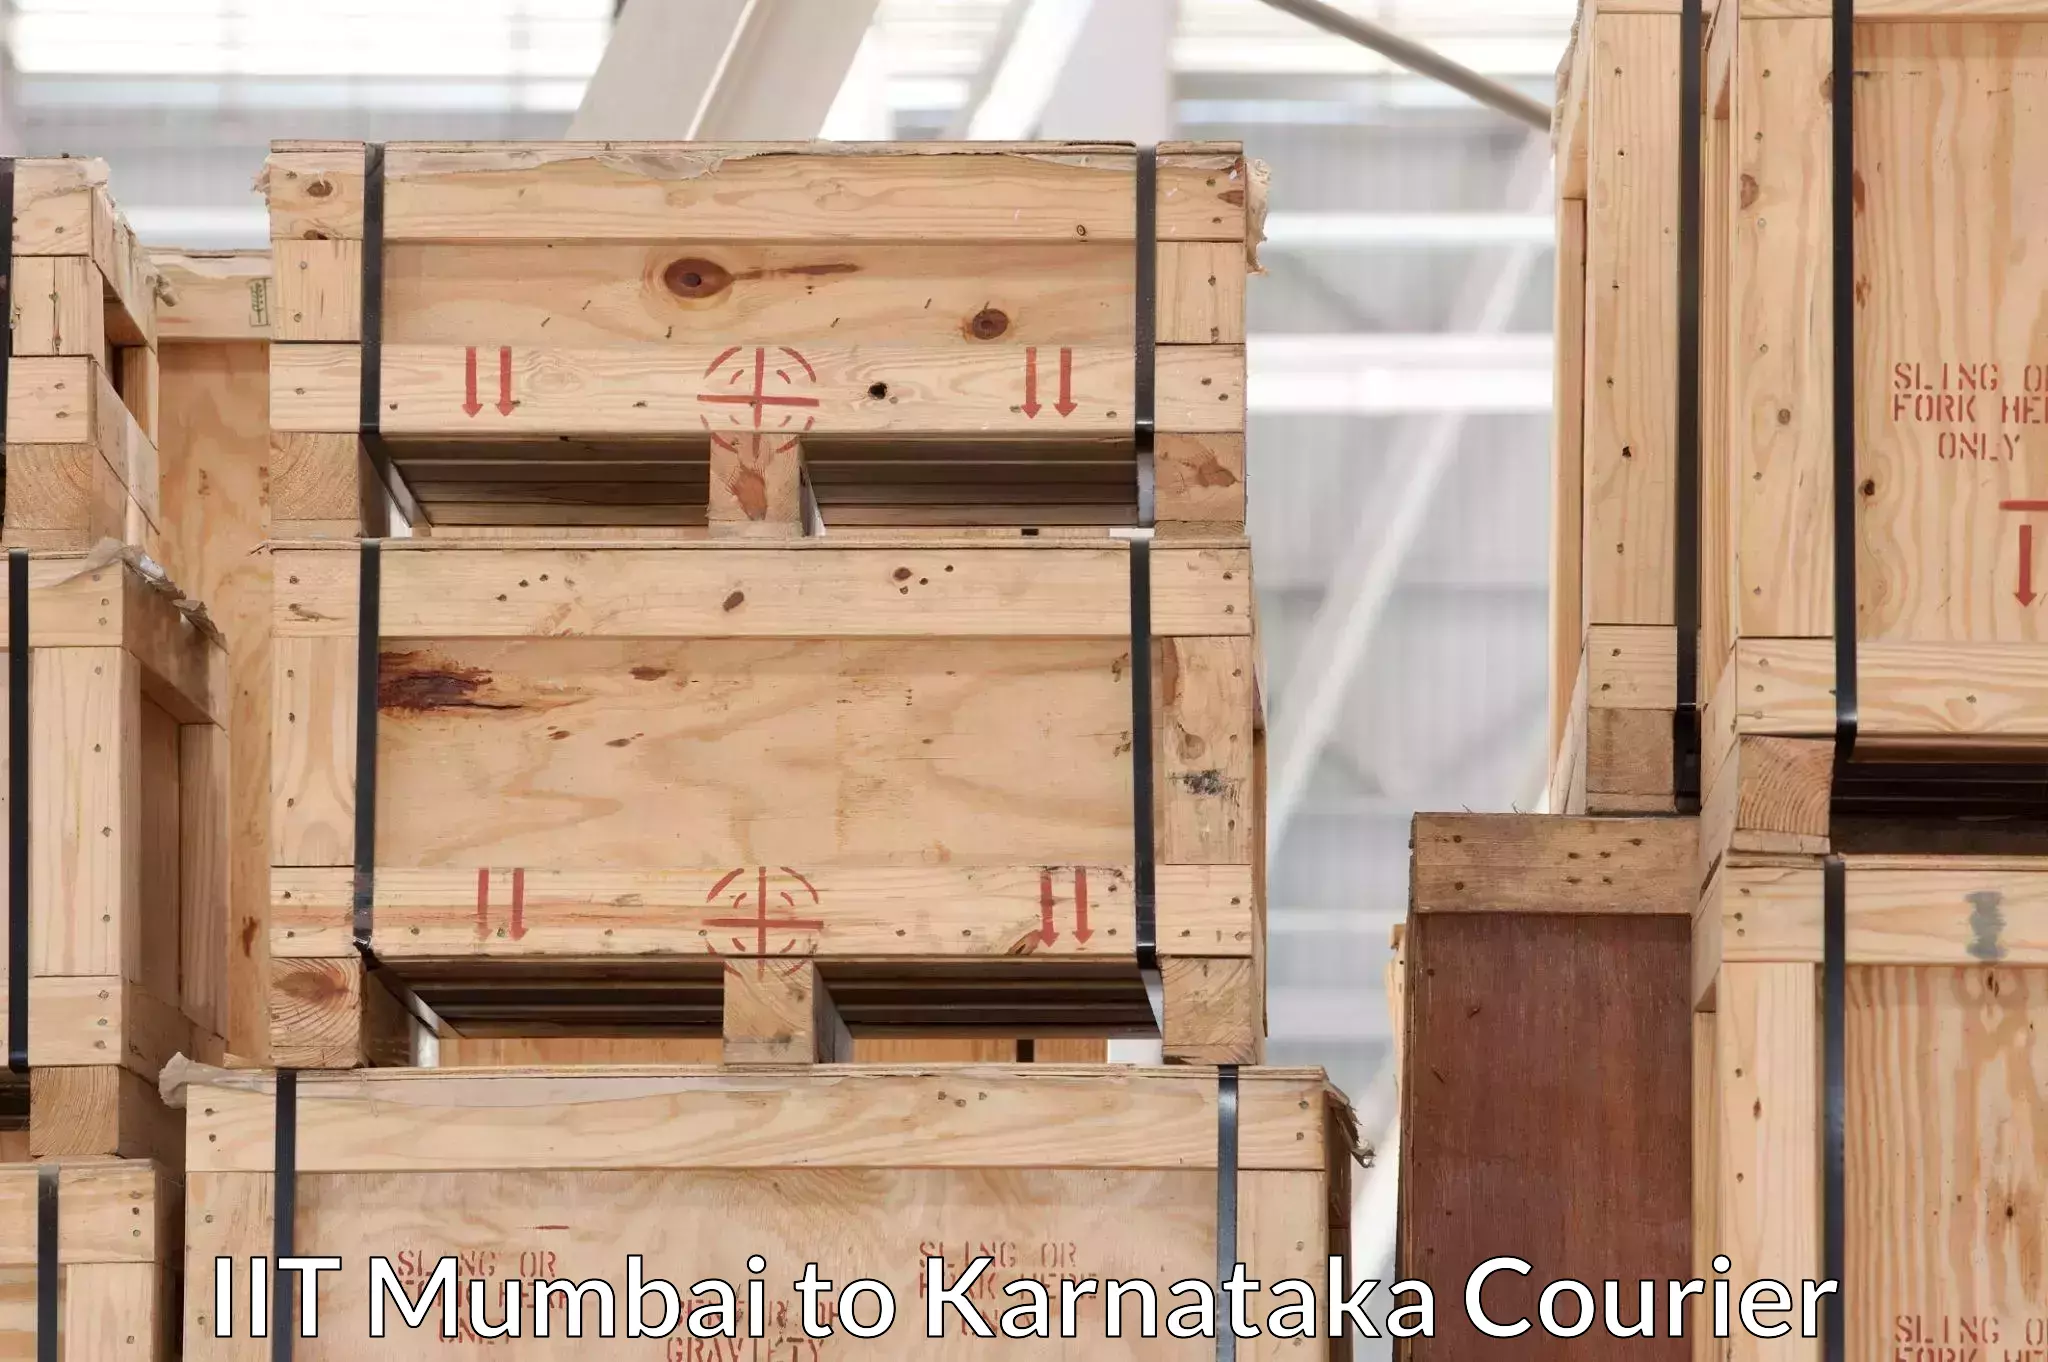 Furniture relocation services in IIT Mumbai to Karnataka